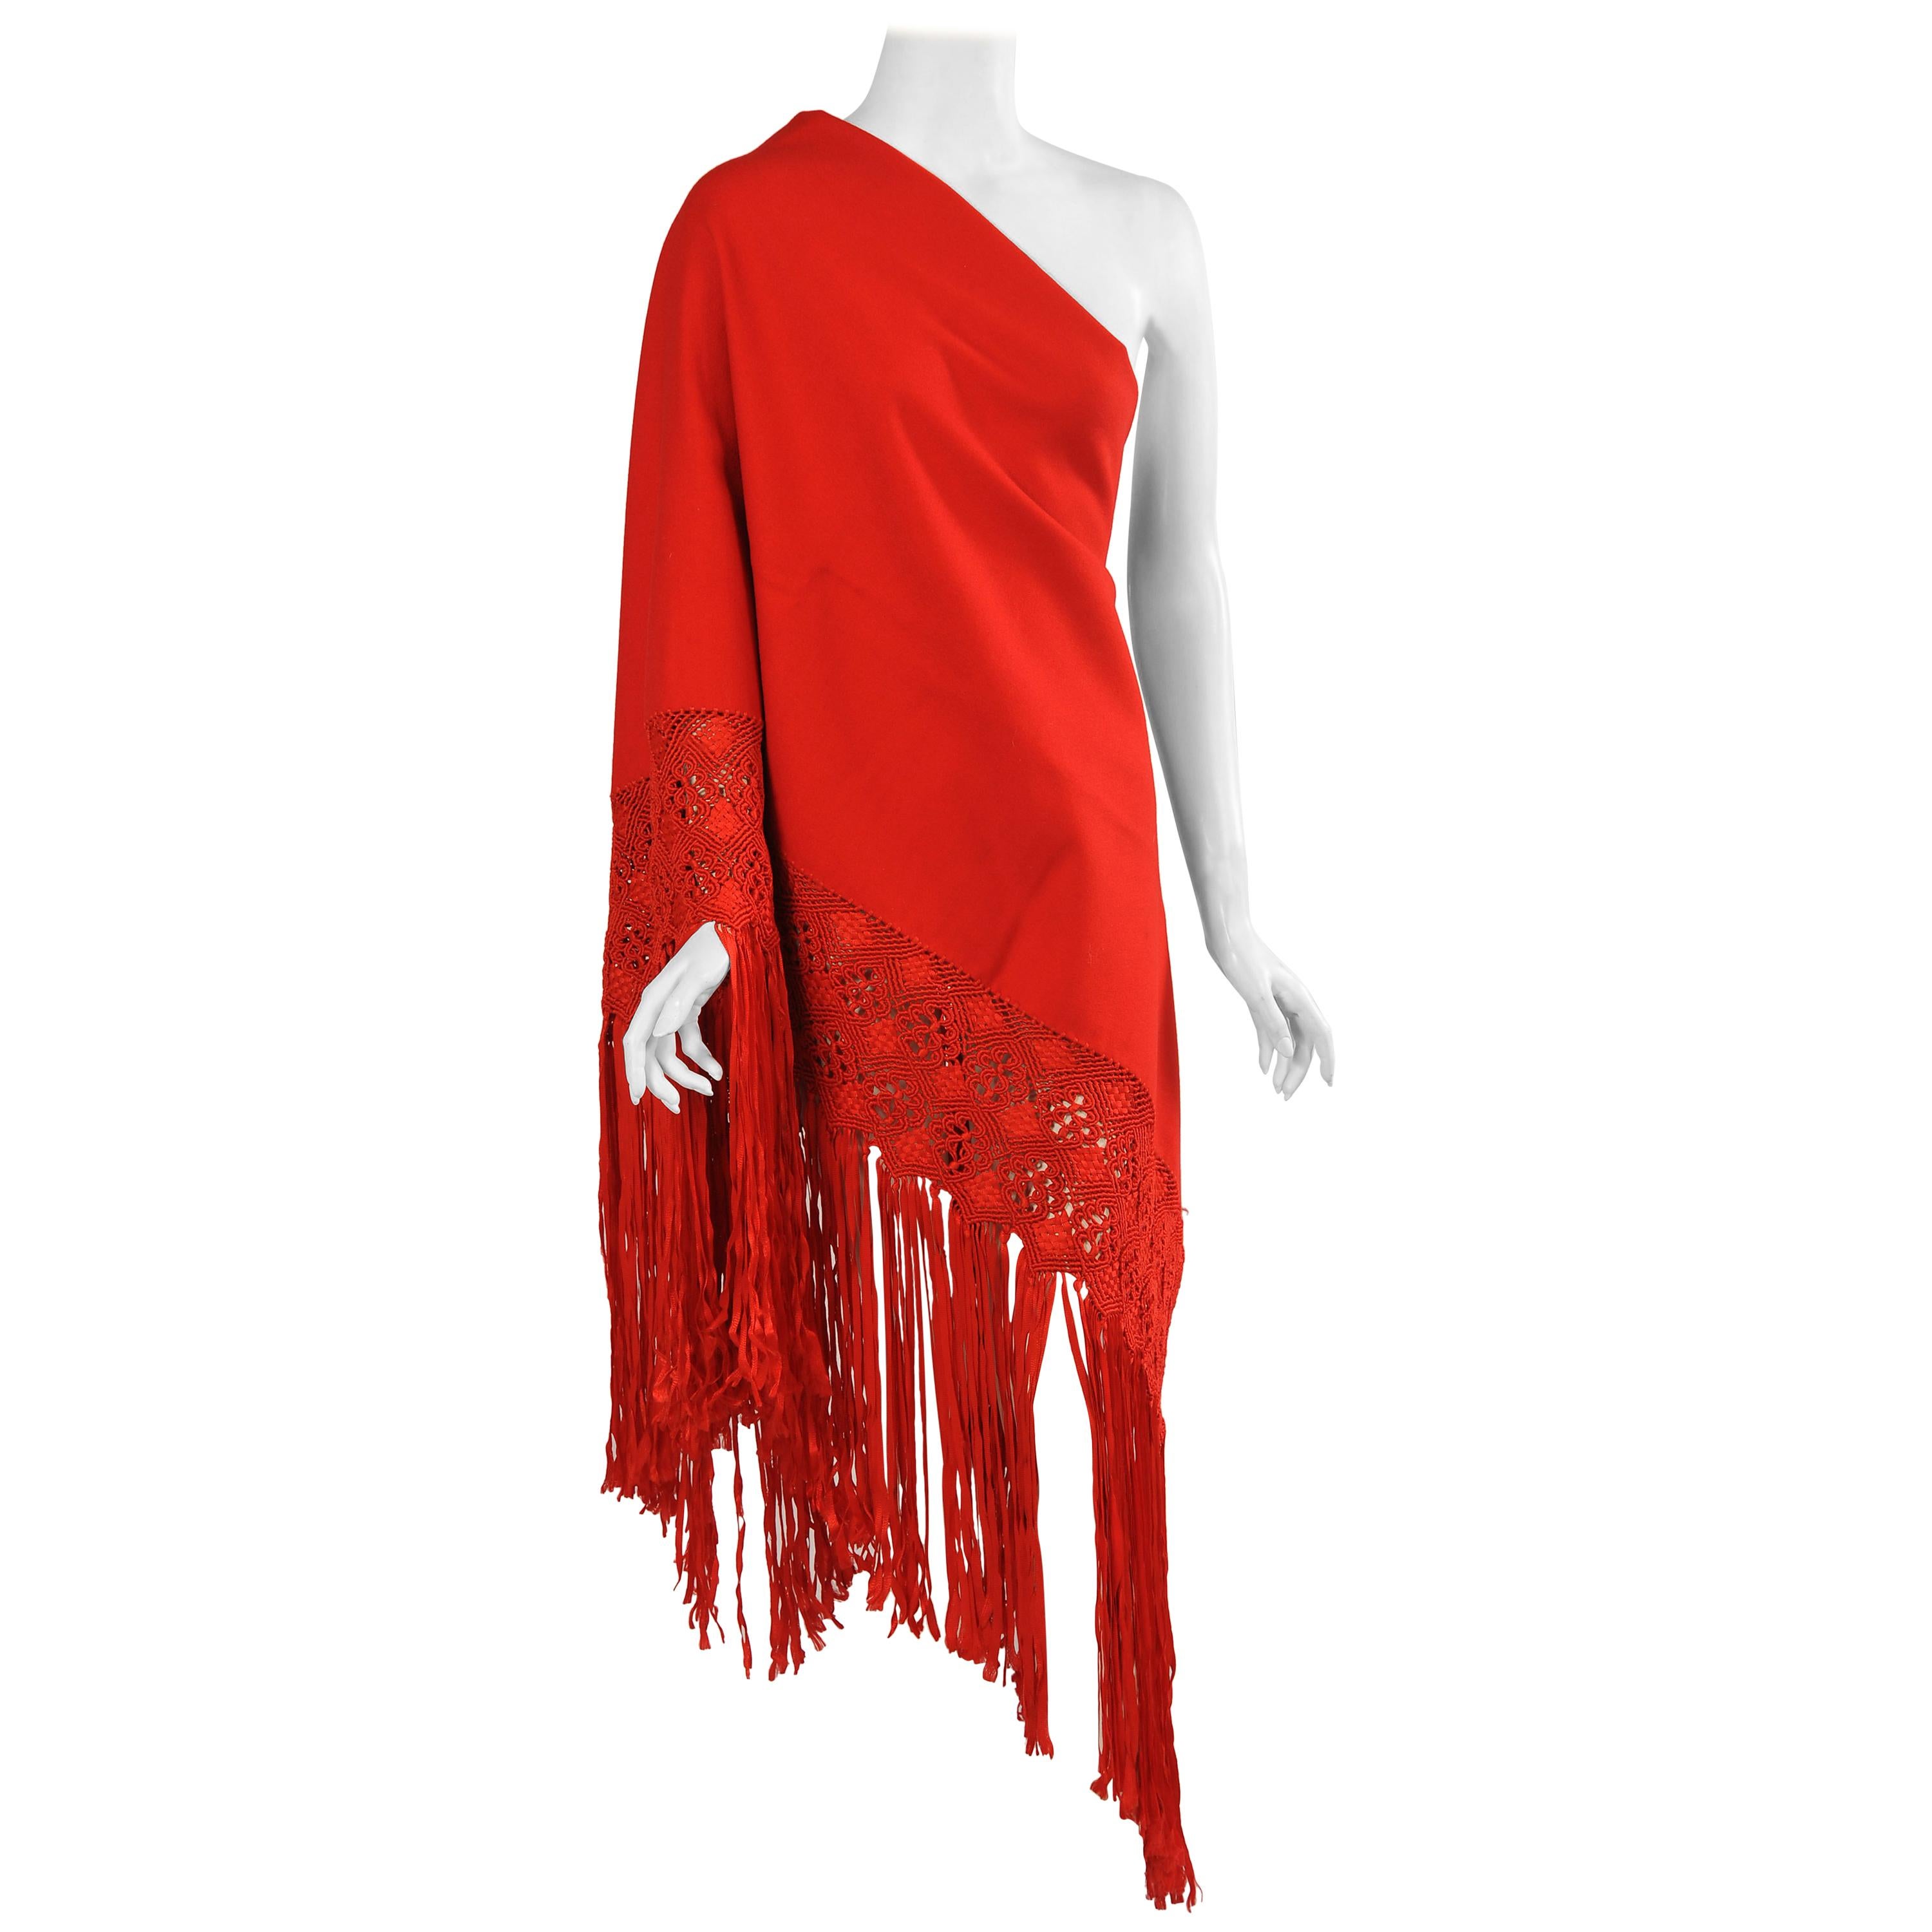 Stunning Red Wool Crepe Shawl with Elaborate Silk Macrame Fringe